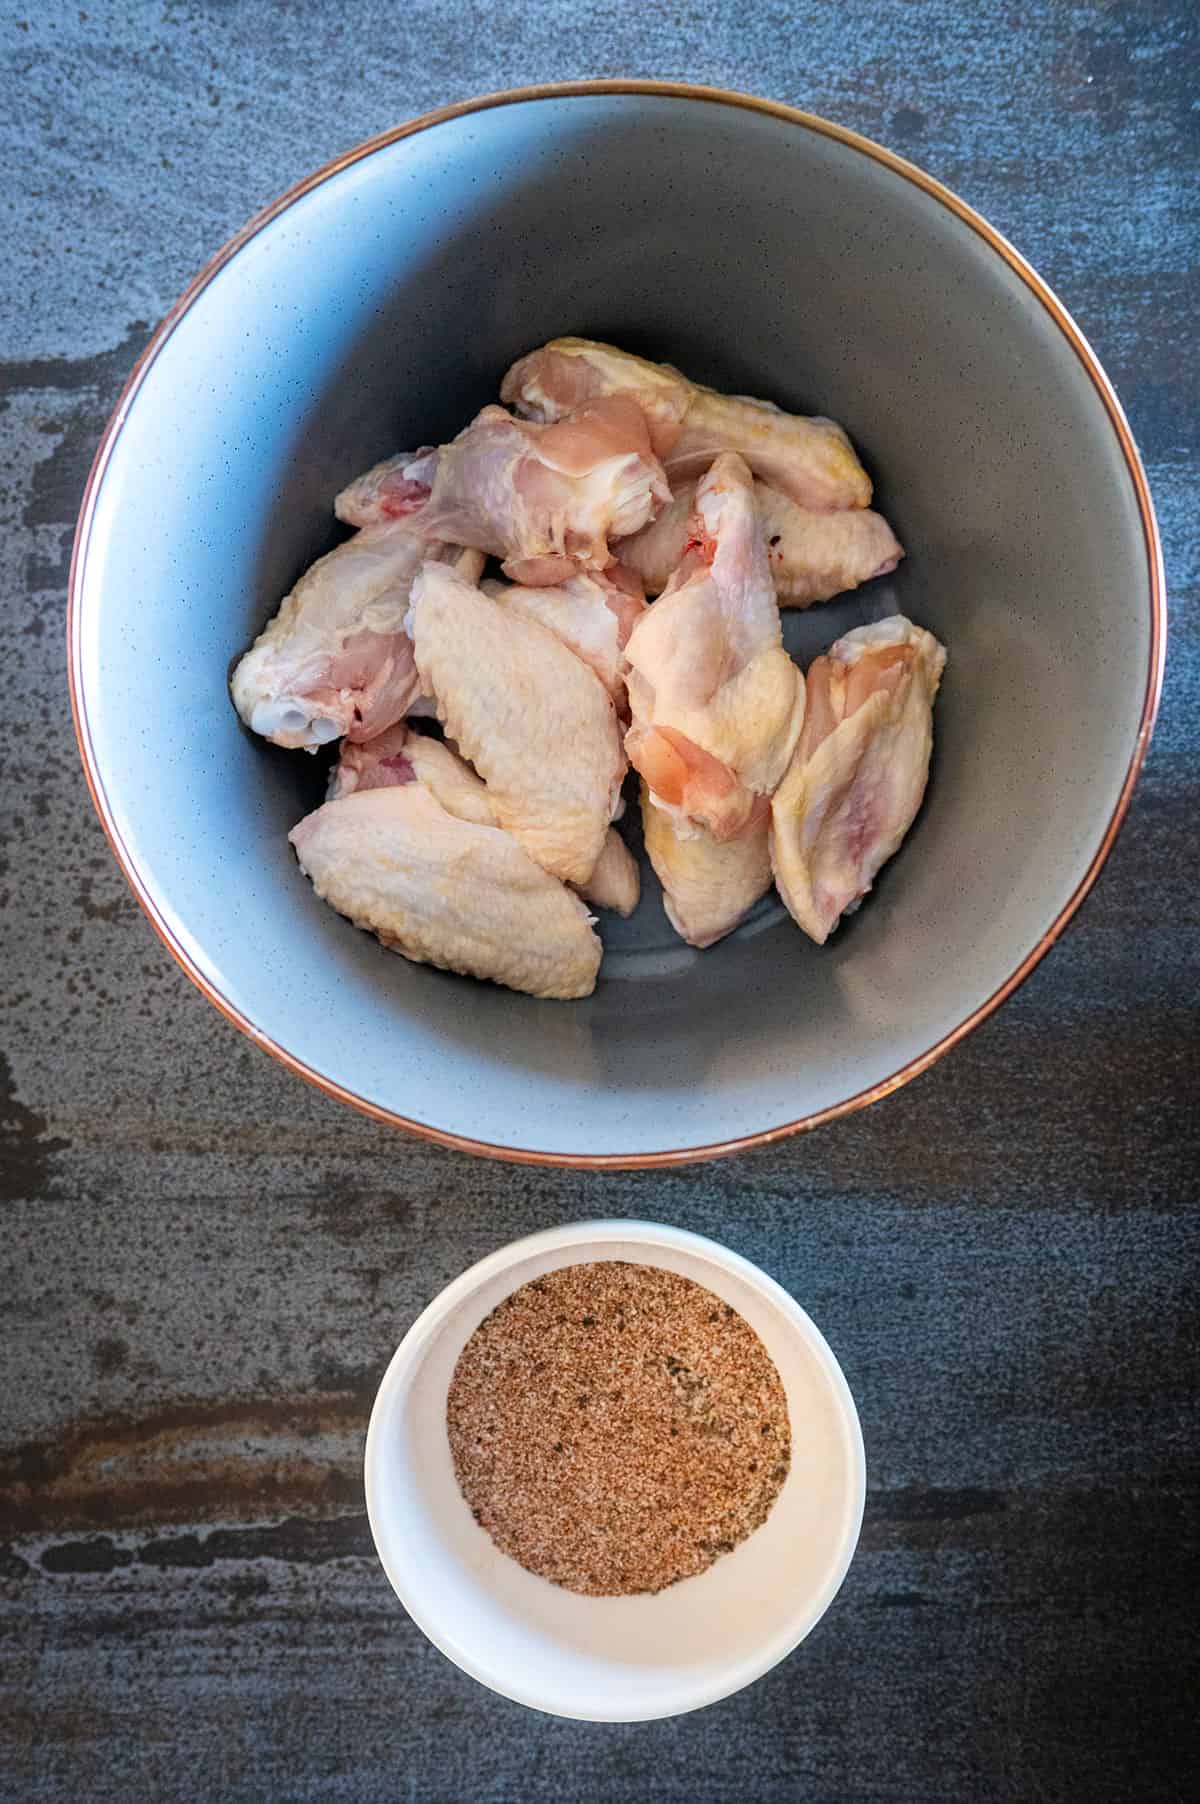 Chicken wings by bowl of dry rub seasoning.